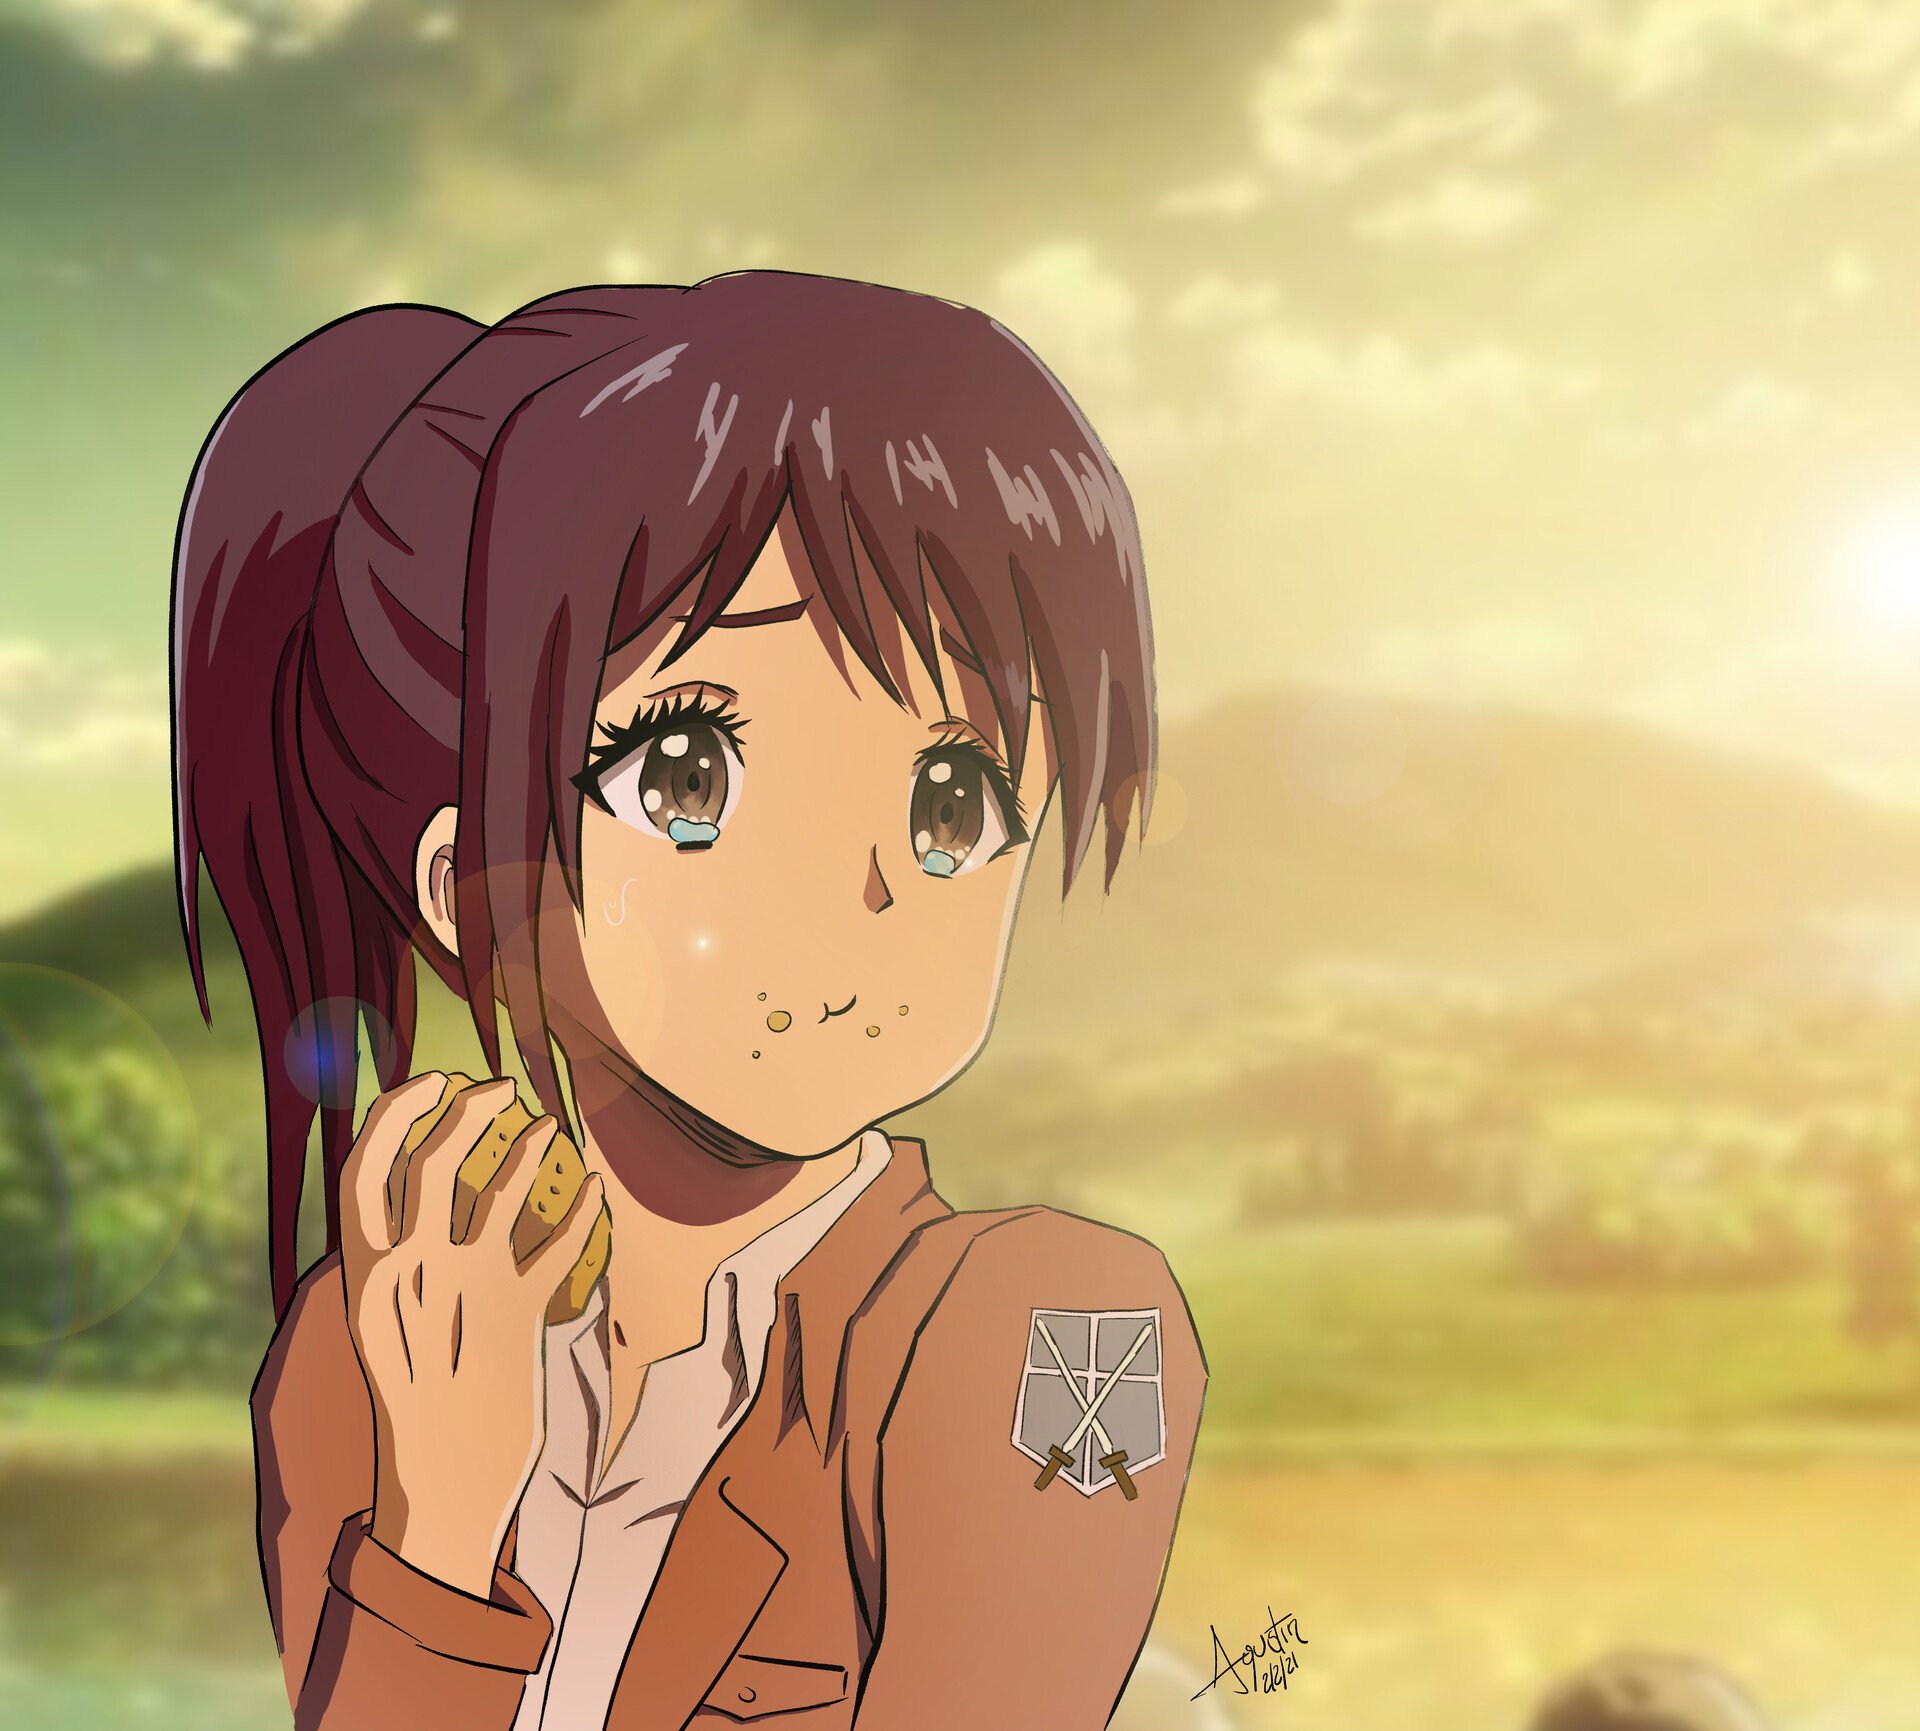 Cartoons & Anime - potato girl - Anime and Cartoon GIFs, Memes and Videos.  - Anime | Cartoons | Anime Memes | Cartoon Memes | Cartoon Anime -  Cheezburger